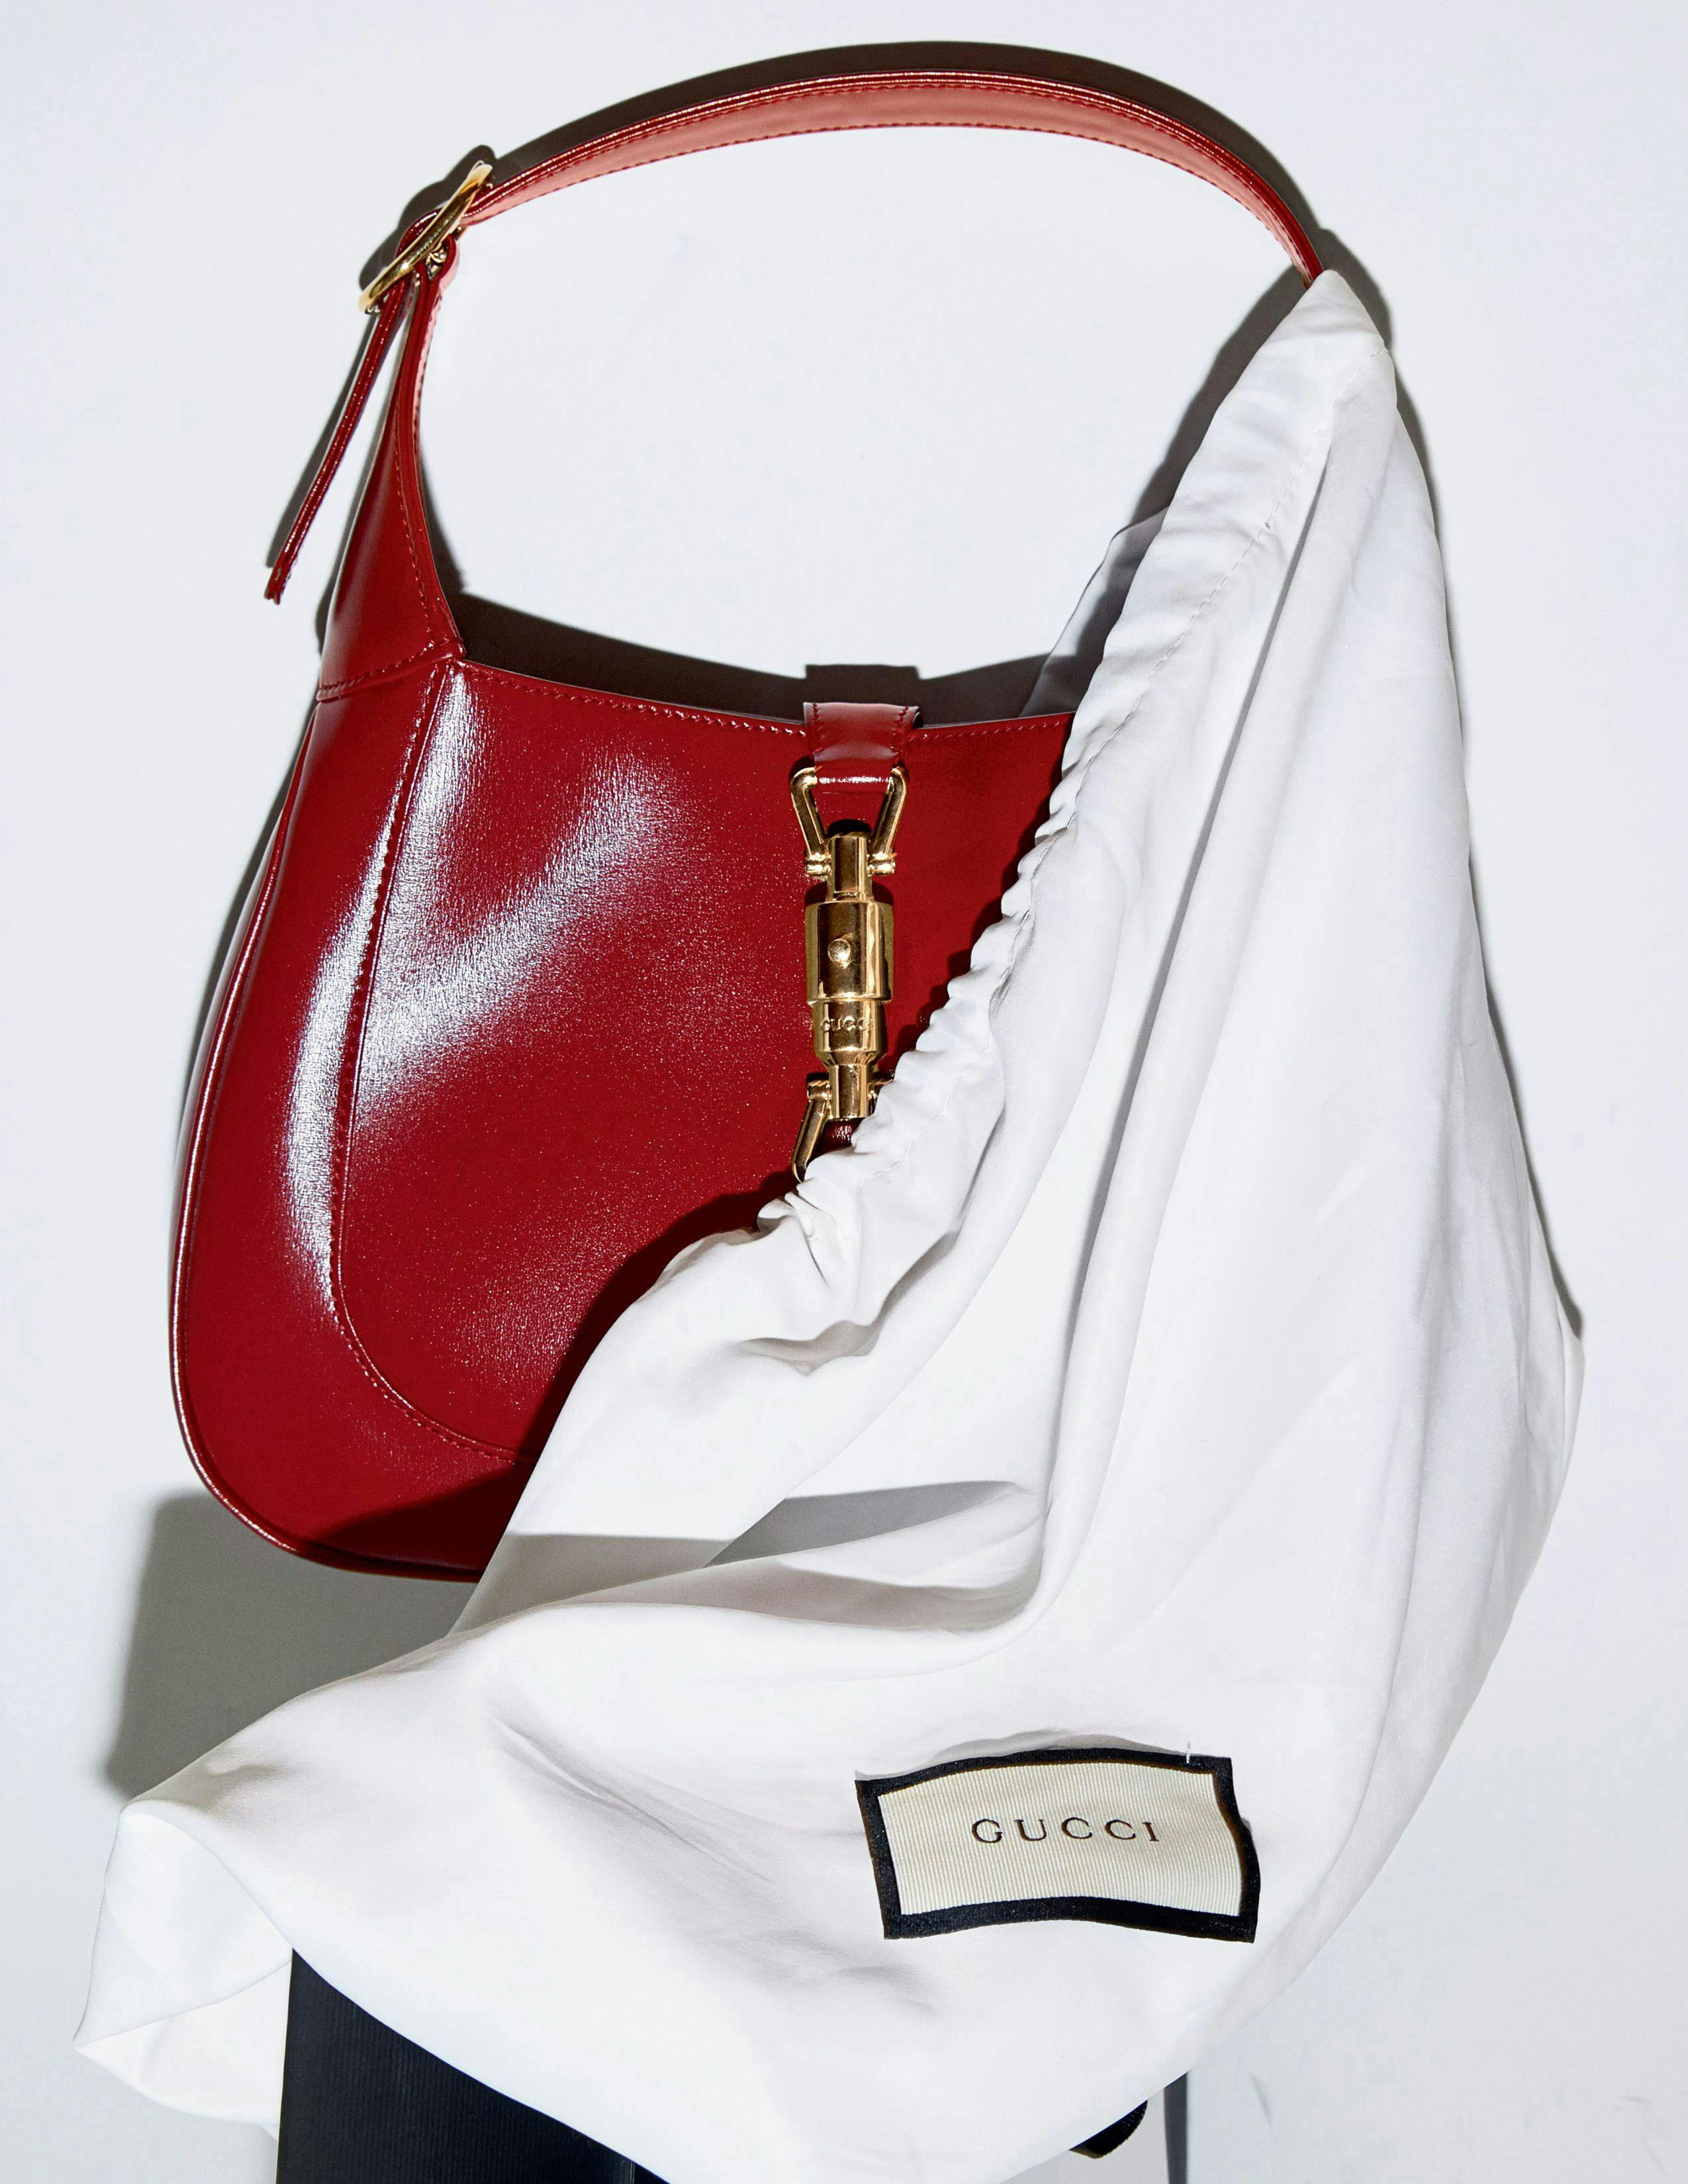 handbag accessories bag accessory clothing apparel purse